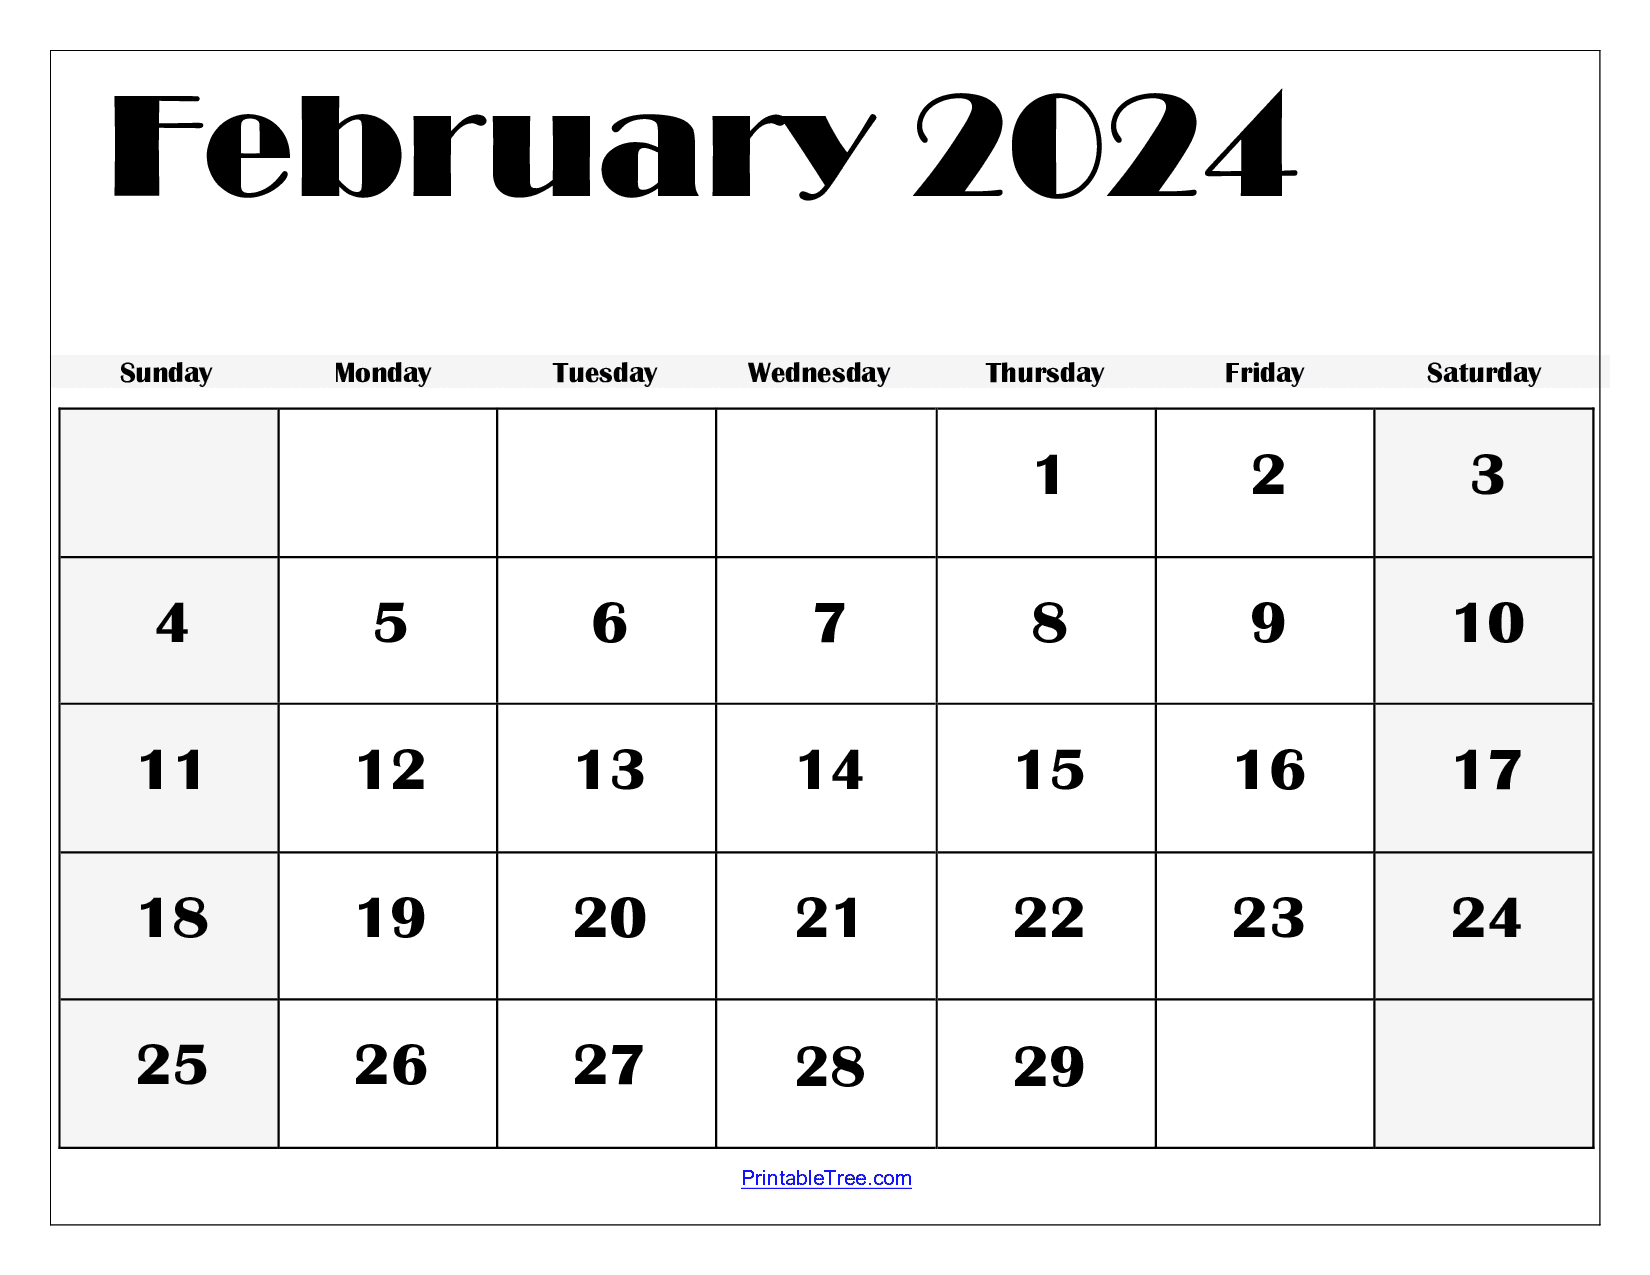 February 2024 Calendar Printable Pdf Template With Holidays for Feb Printable Calendar 2024